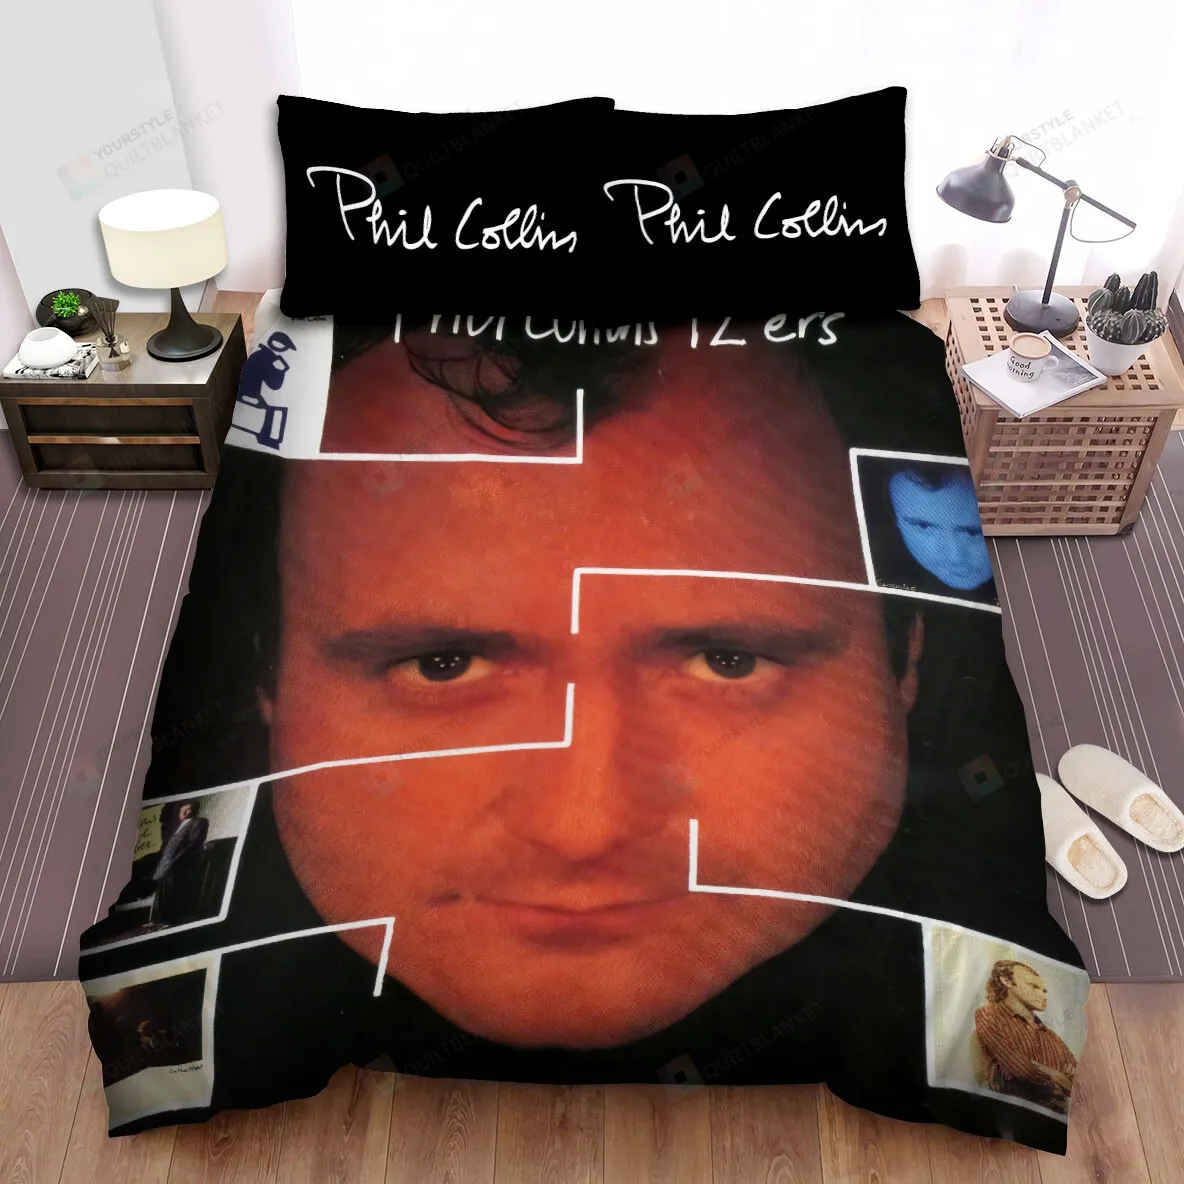 12'Ers Phil Collins Bed Sheets Spread Comforter Duvet Cover Bedding Sets